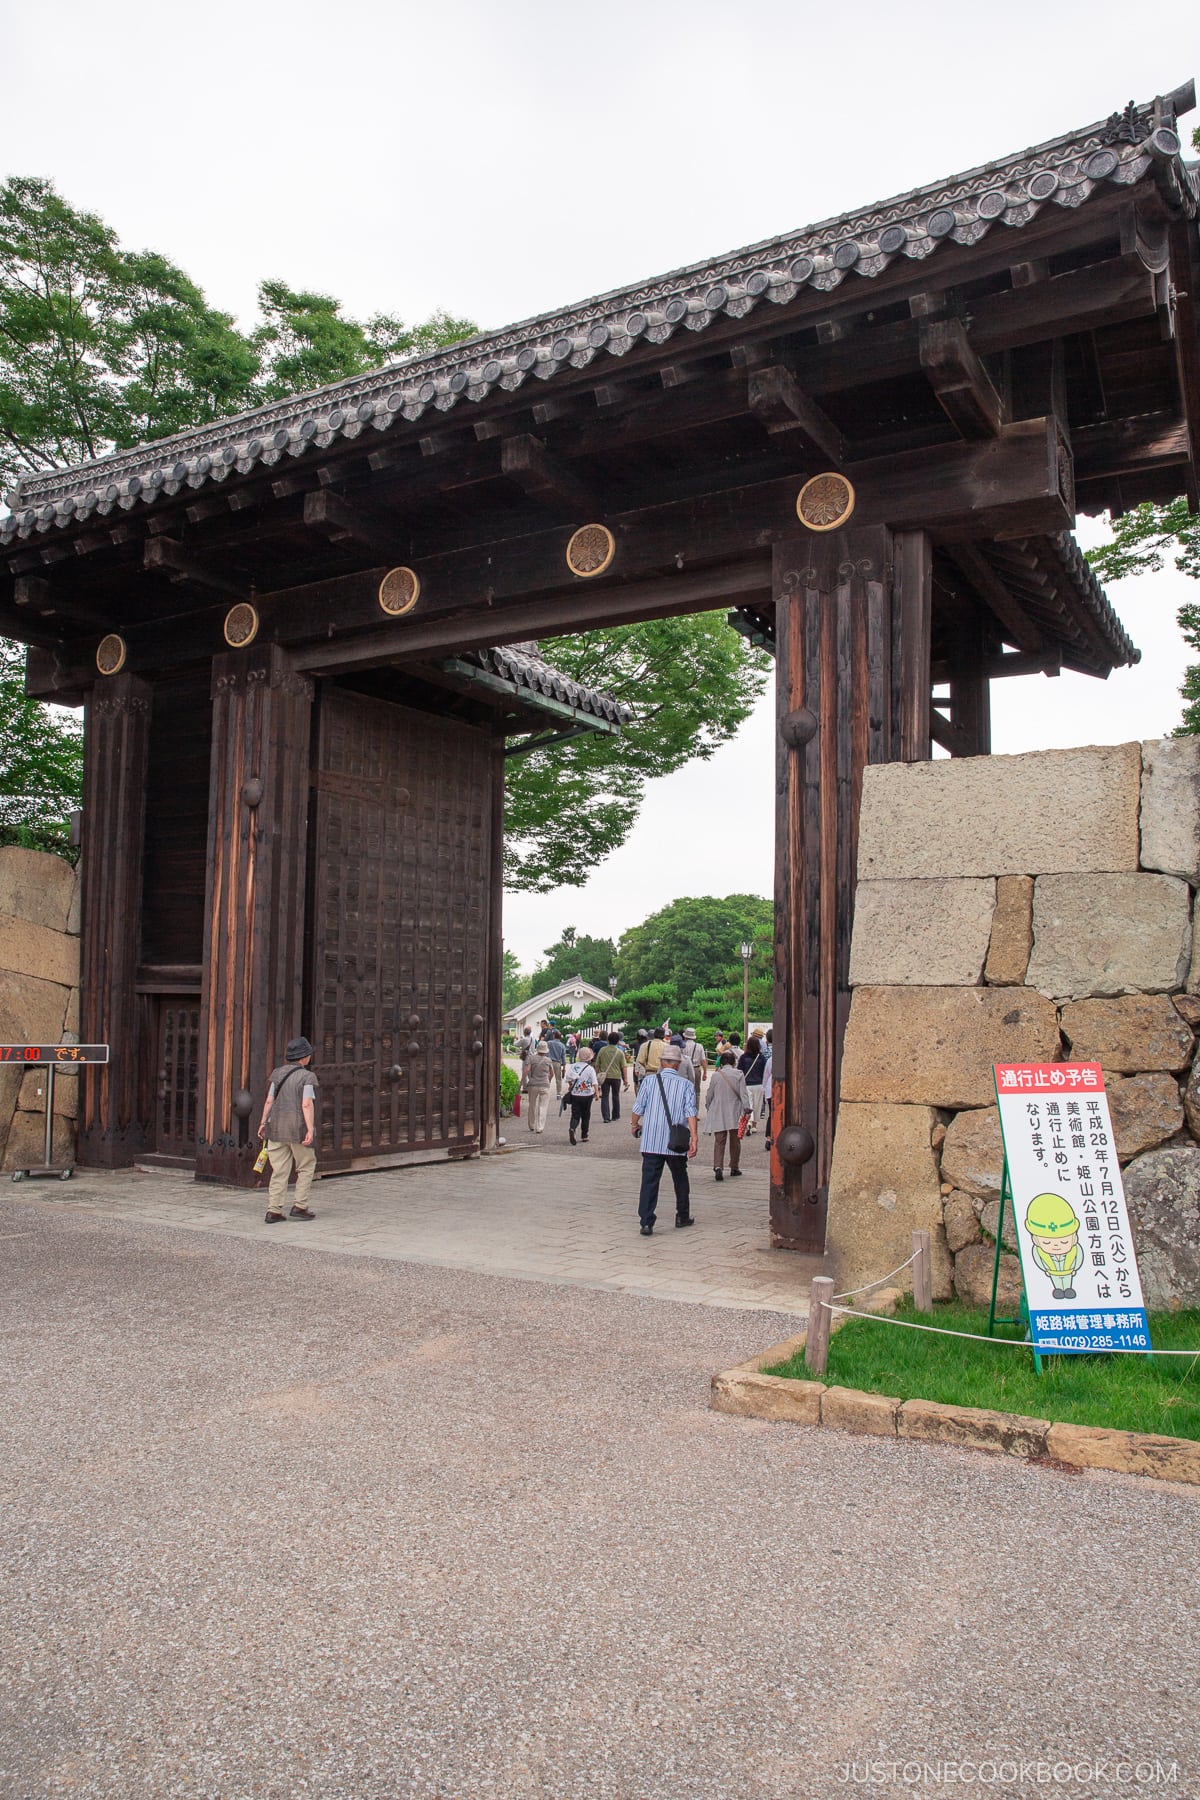 Otemon Entrance gate to Himeji Castle